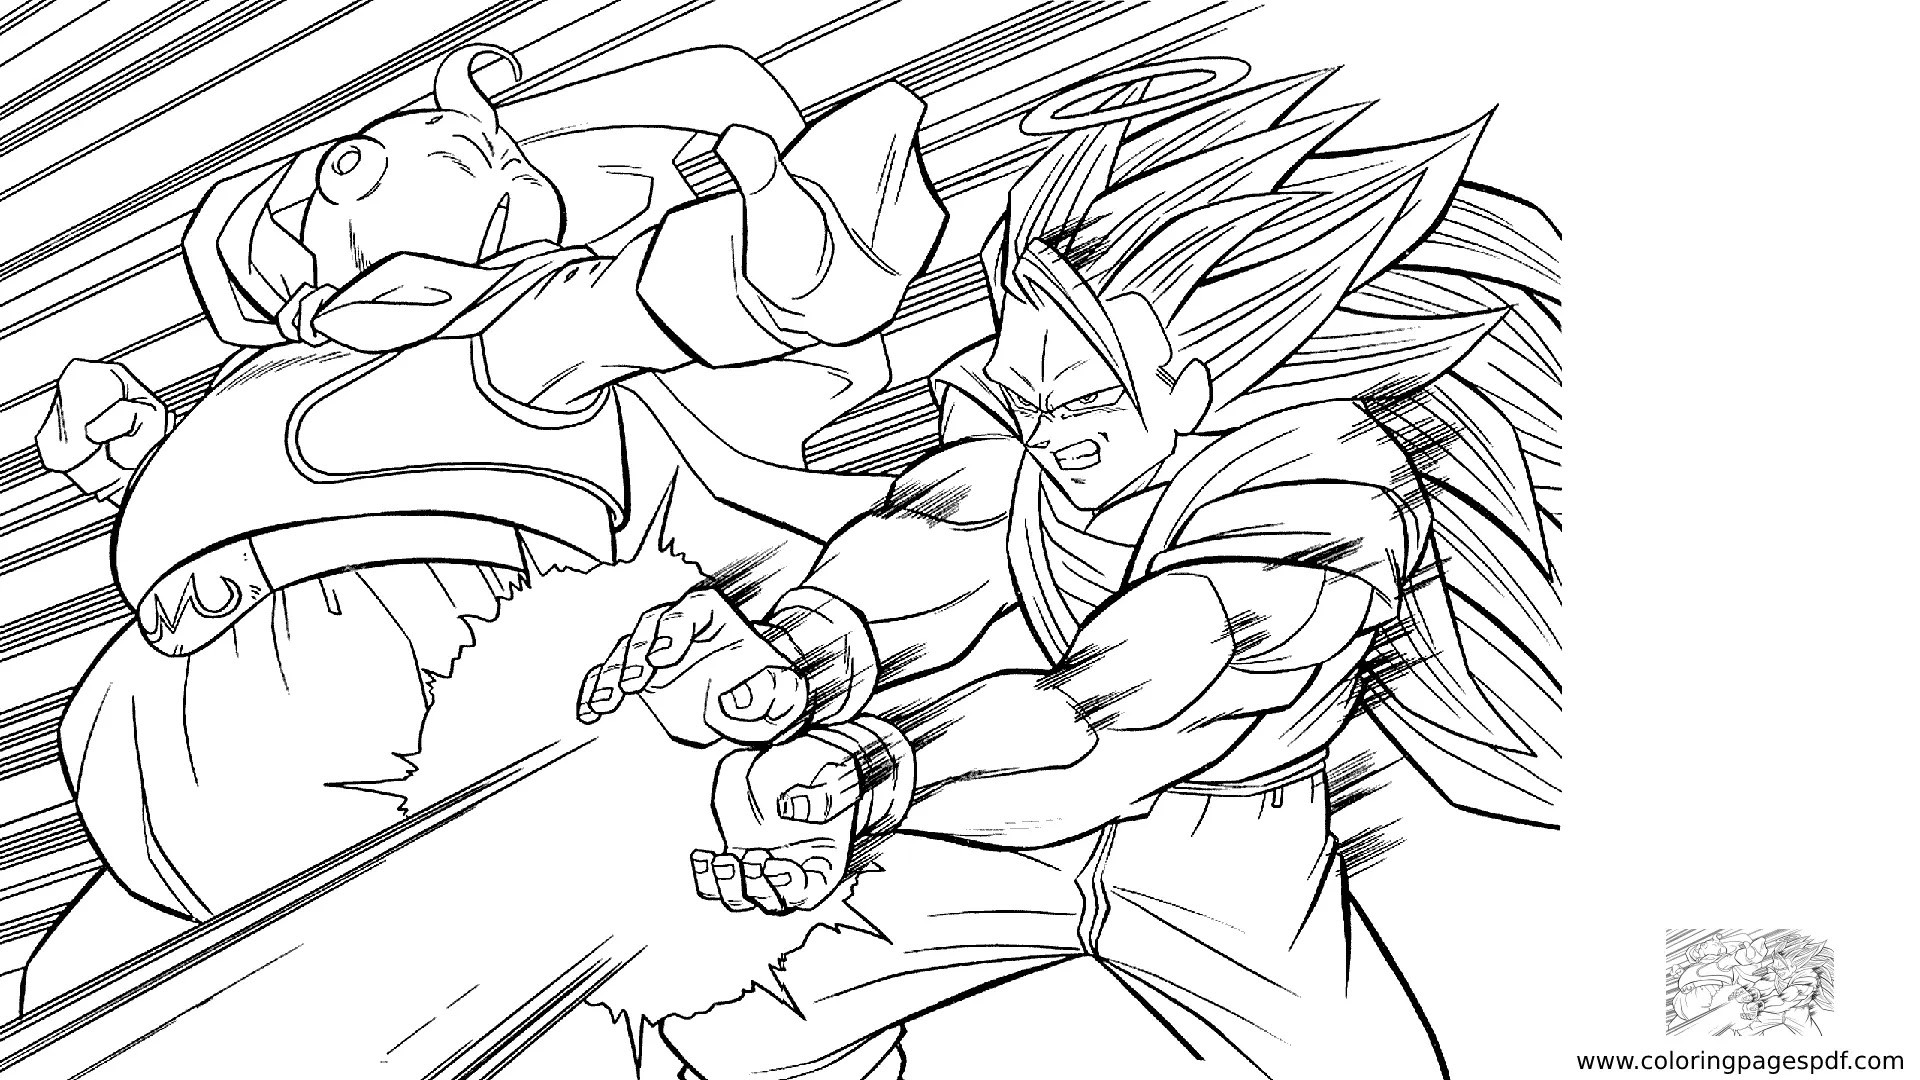 Coloring Page Of Goku SSJ3 Vs Majin Buu